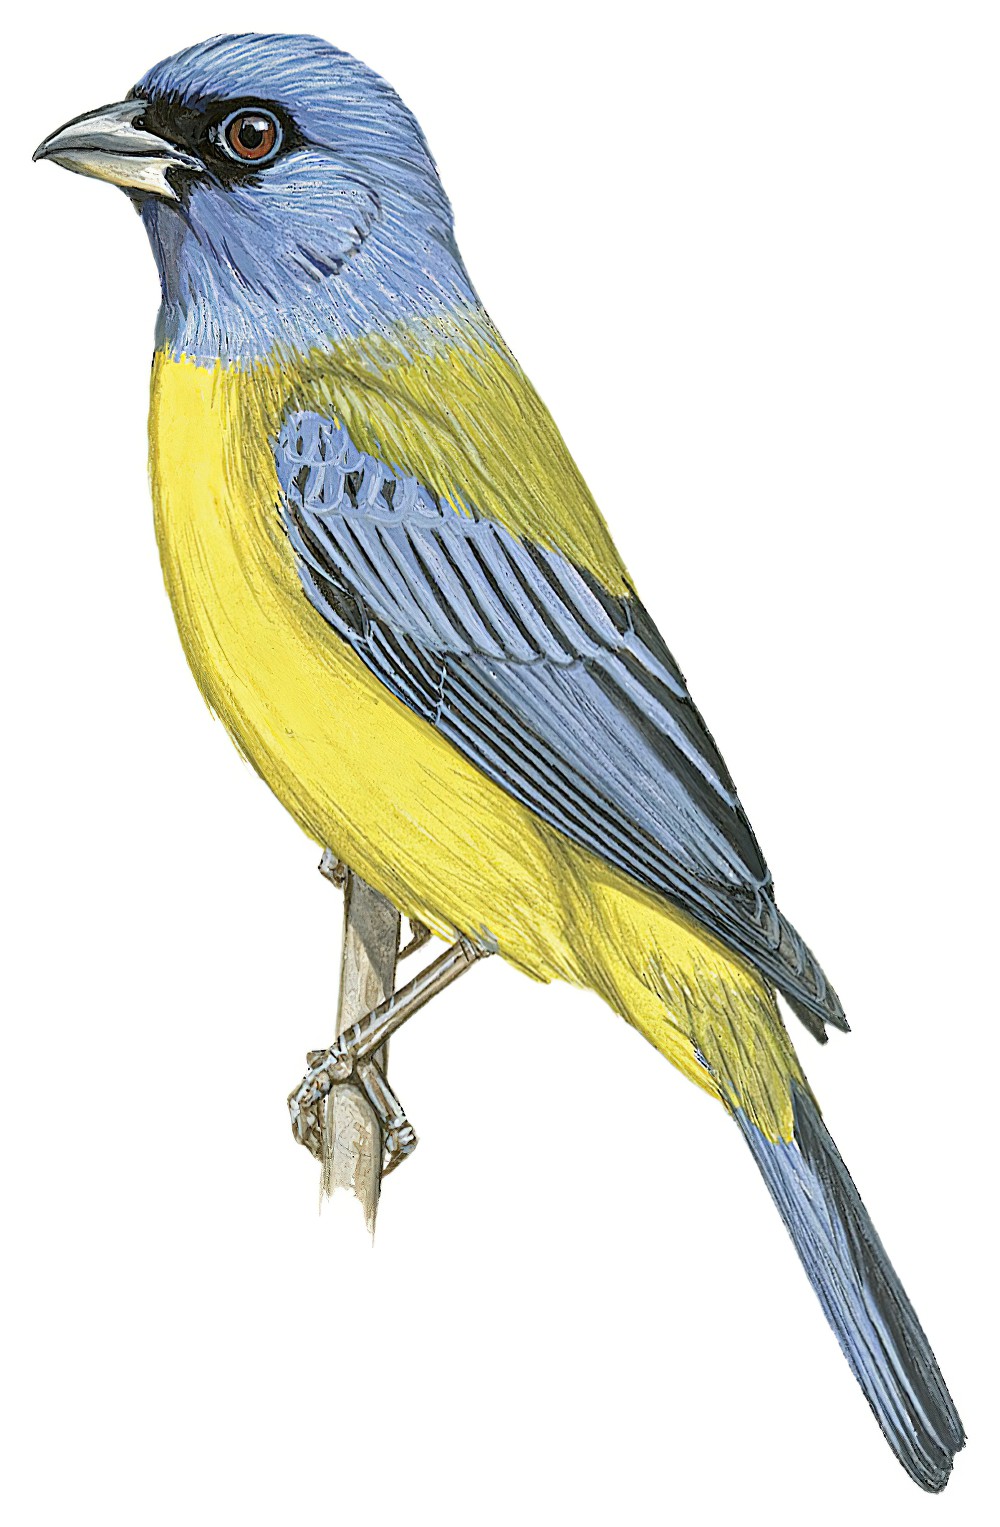 Blue-and-yellow Tanager / Pipraeidea bonariensis